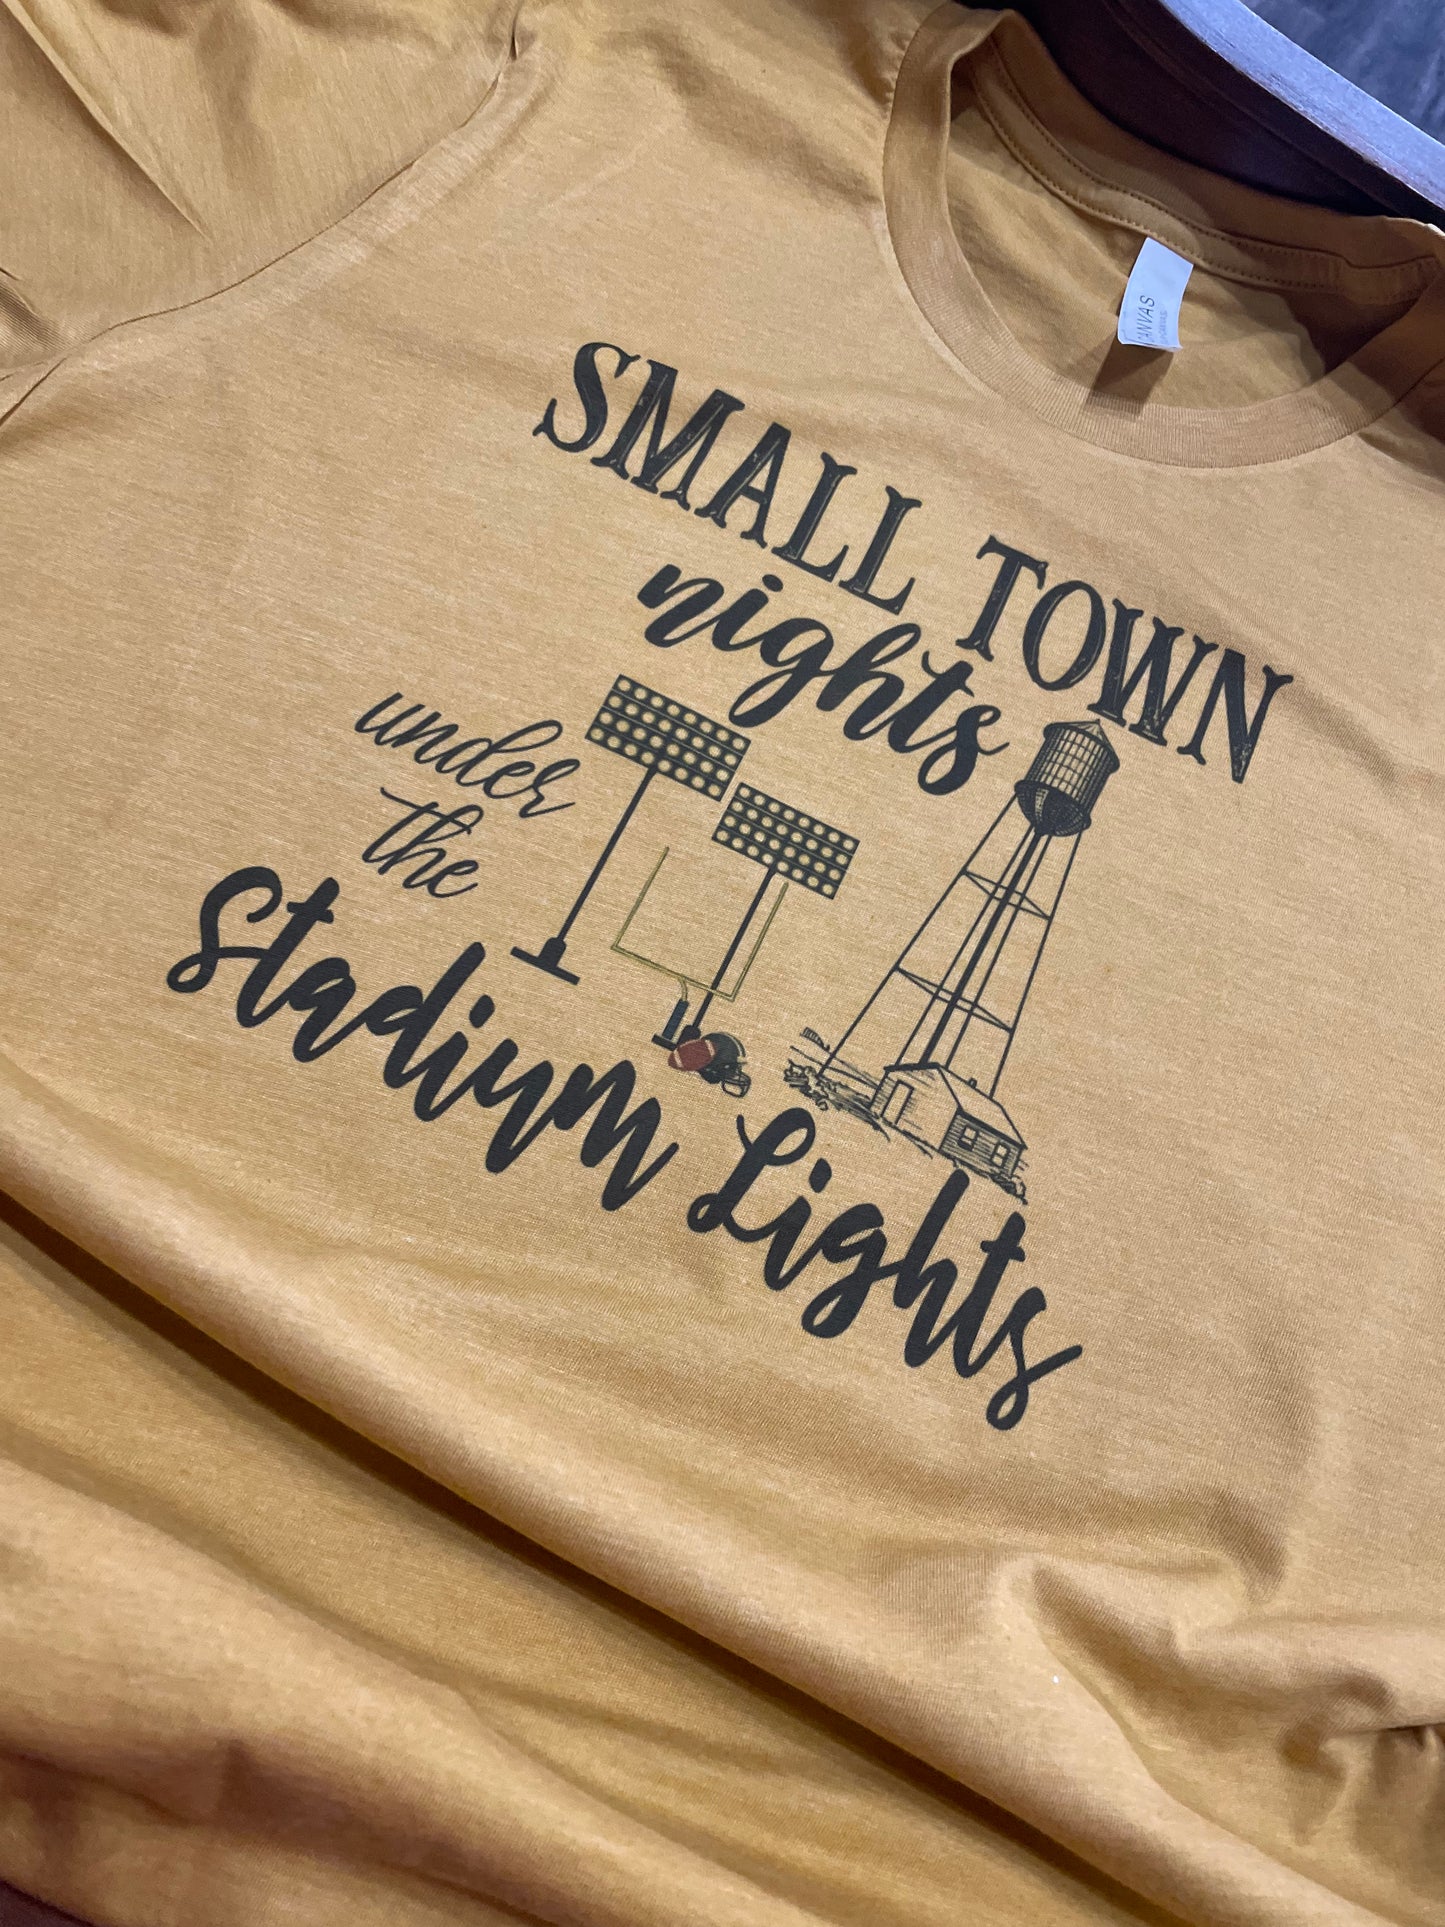 Small Town Nights Under the Stadium Lights Teeshirt